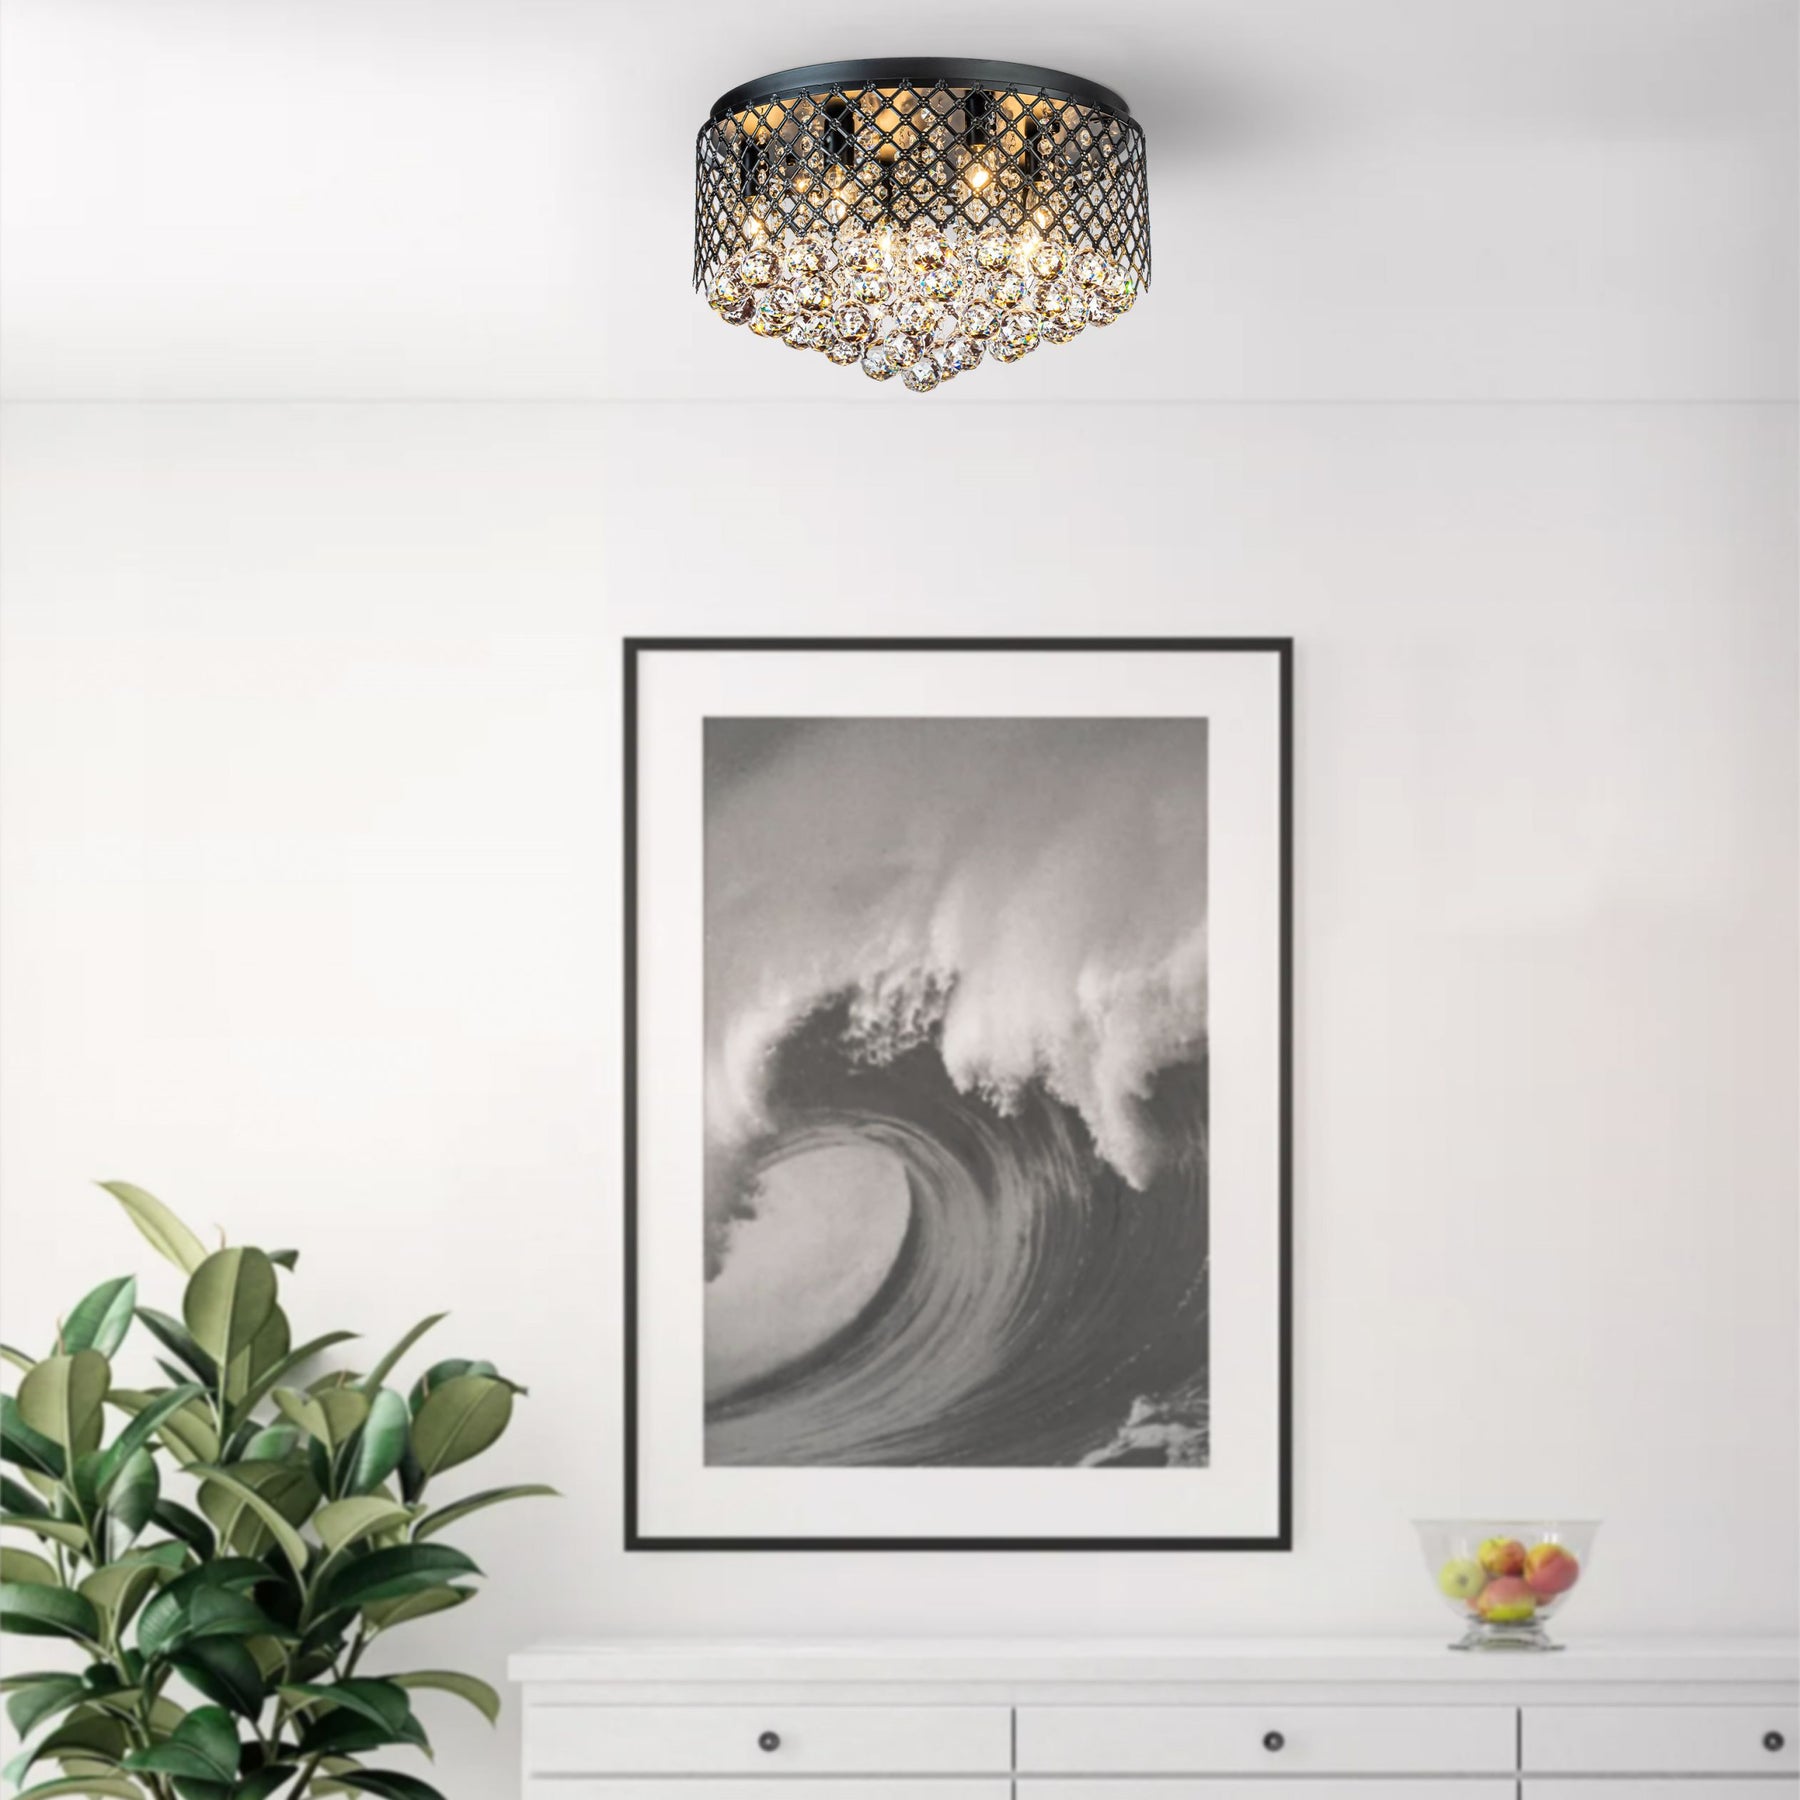 Matte Black Crystal Lattice Flush Mount Ceiling Light